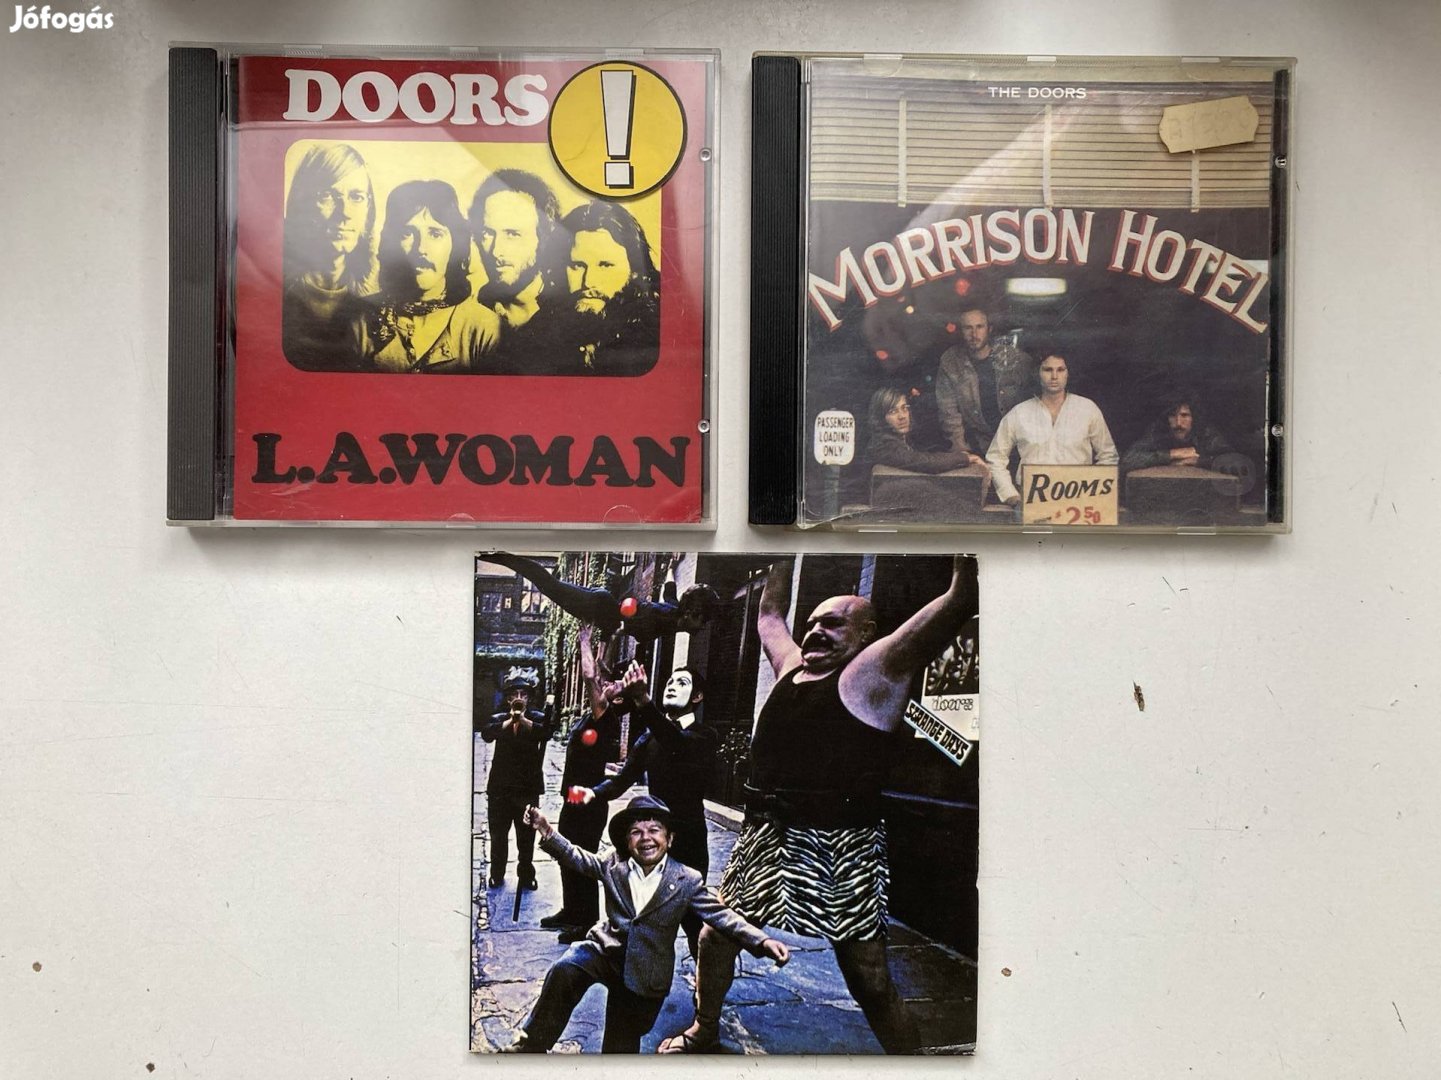 The Doors Hotel LA Woman Strange CD albumok egyben